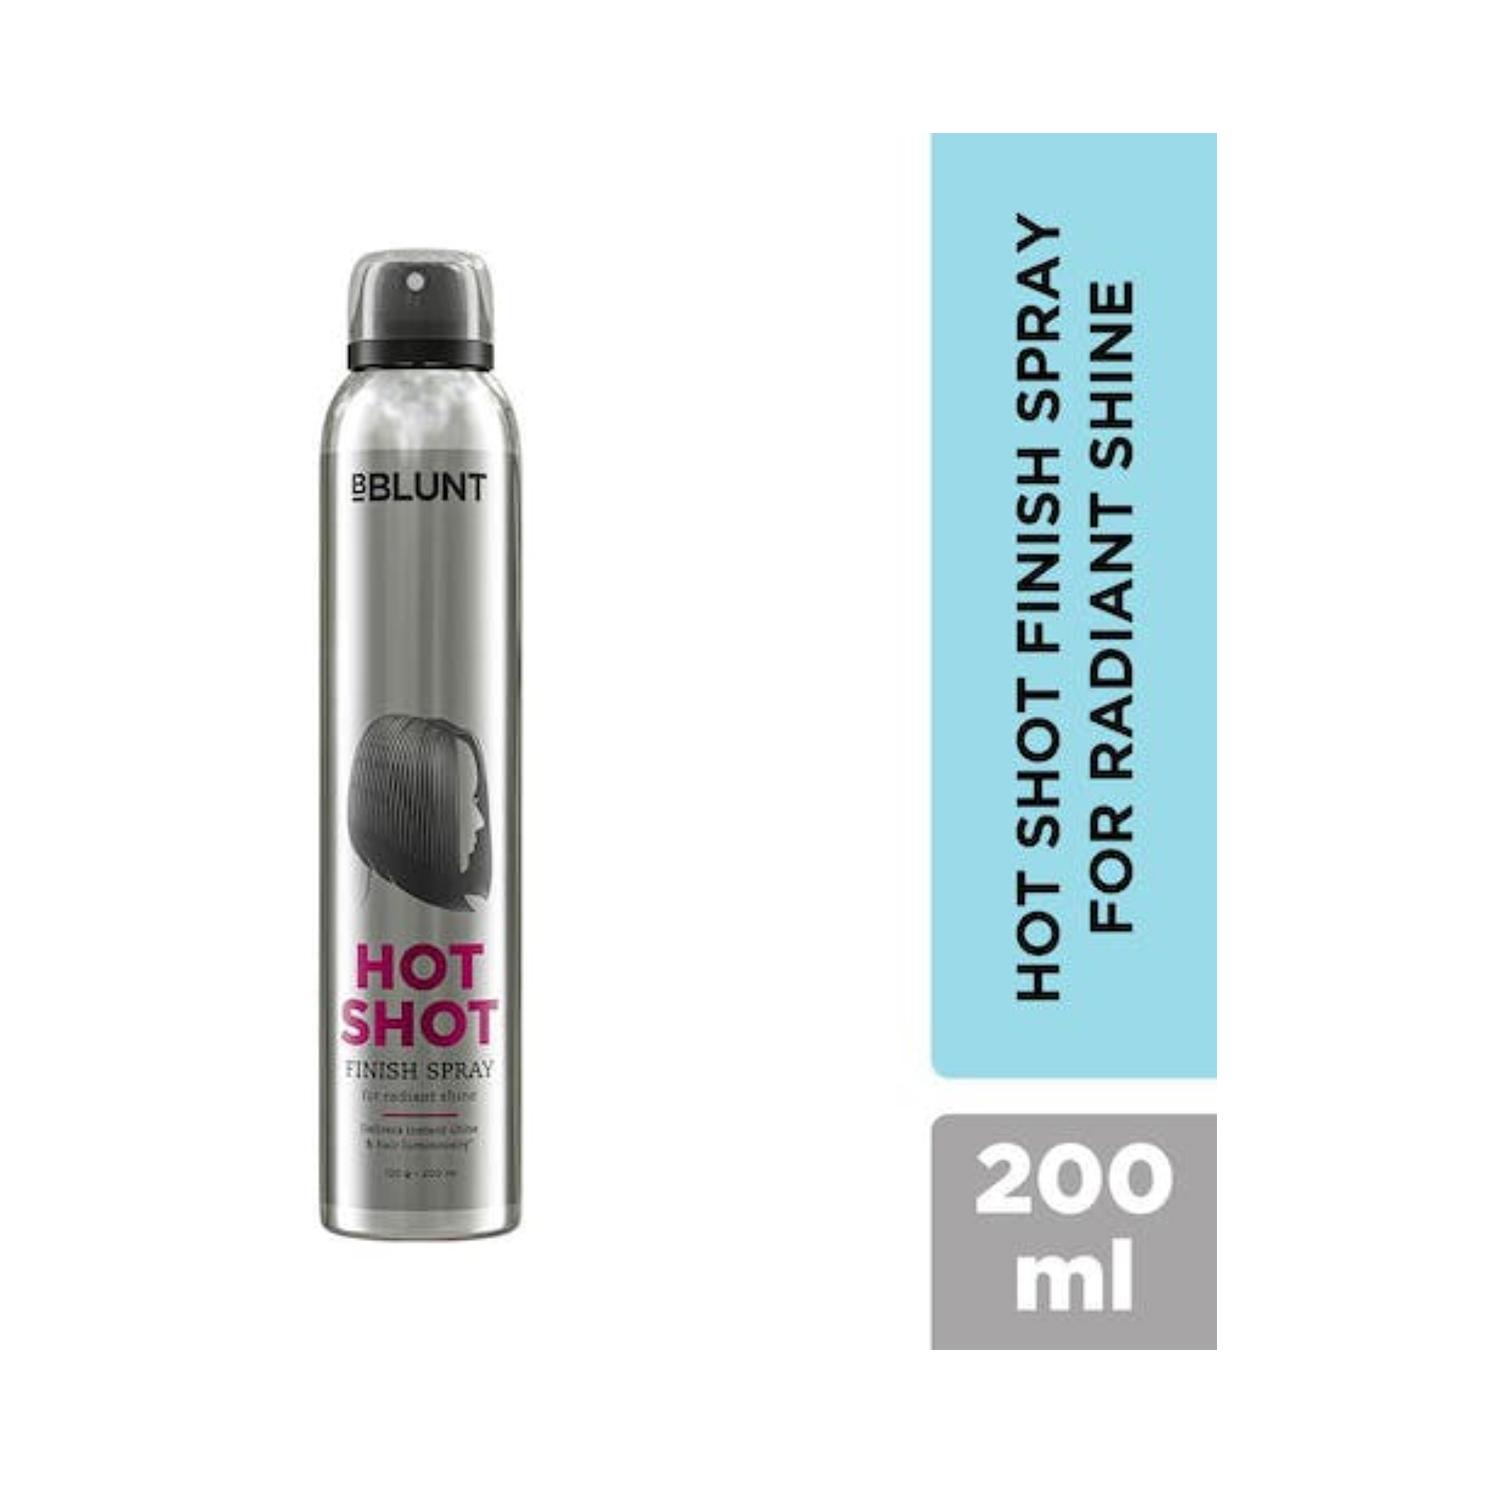 bblunt hot shot finish spray for radiant shine (200ml)